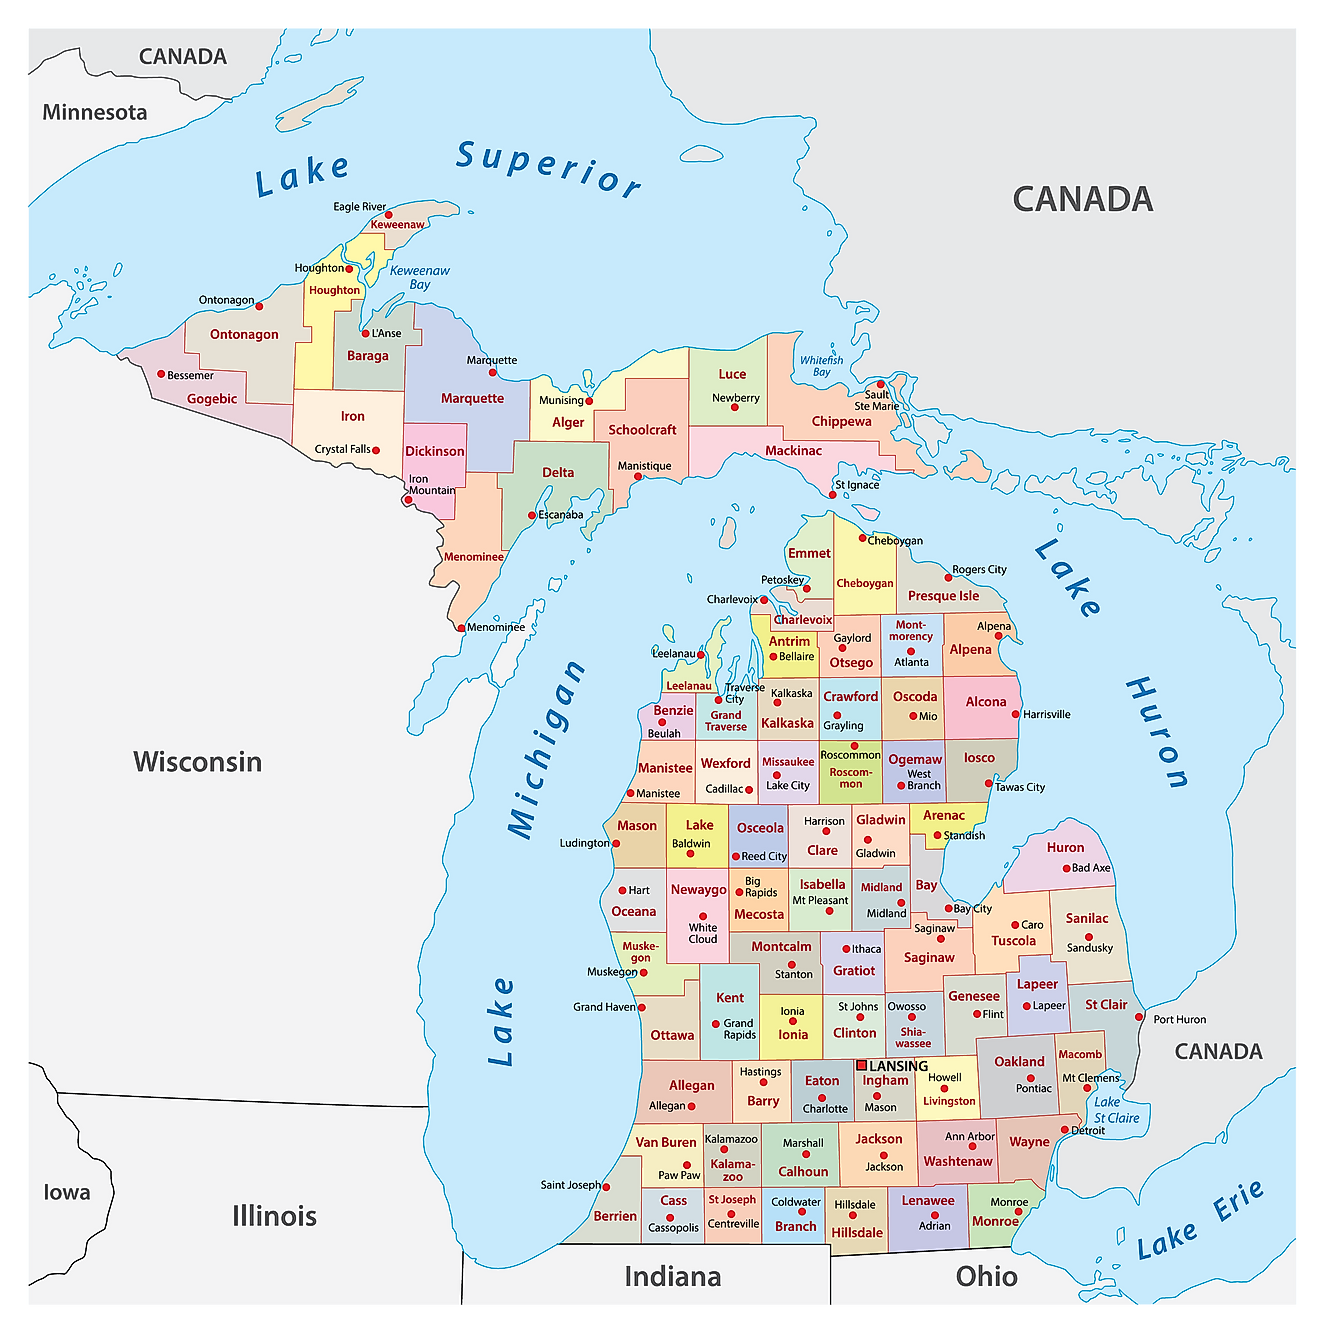 Michigan Maps & Facts - World Atlas